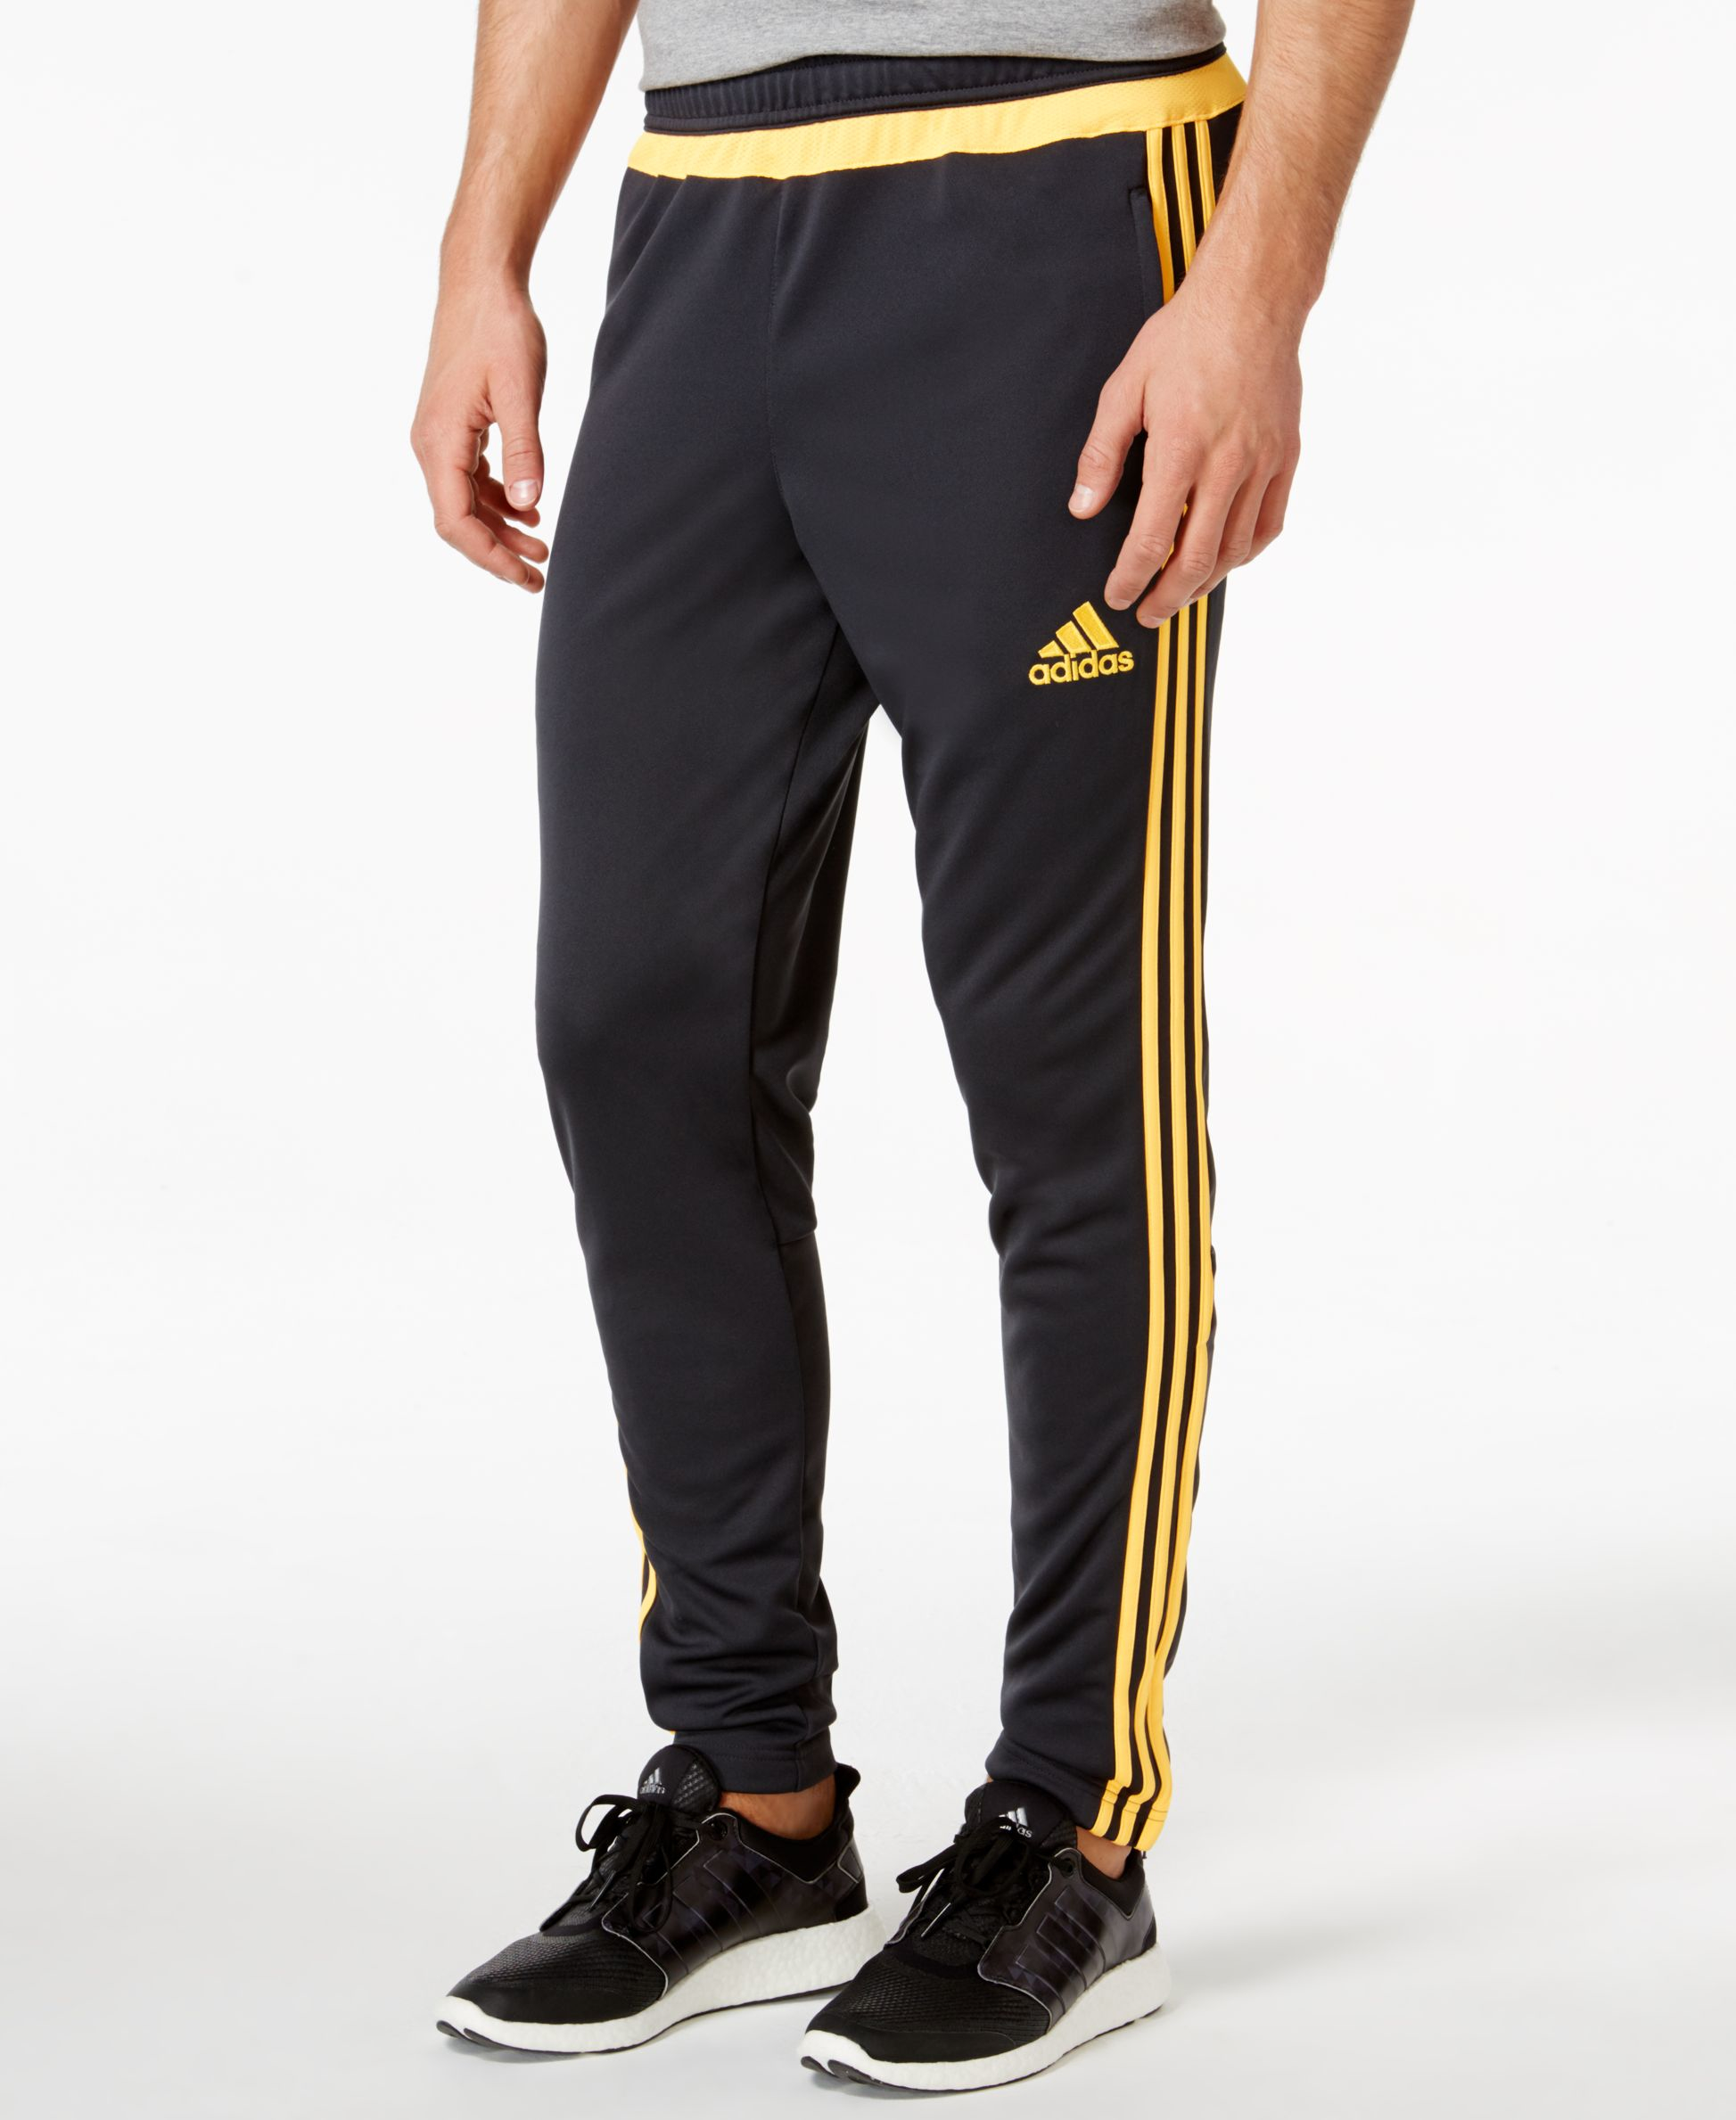 adidas Originals Synthetic Men's Tiro 15 Training Pants in Gray for Men